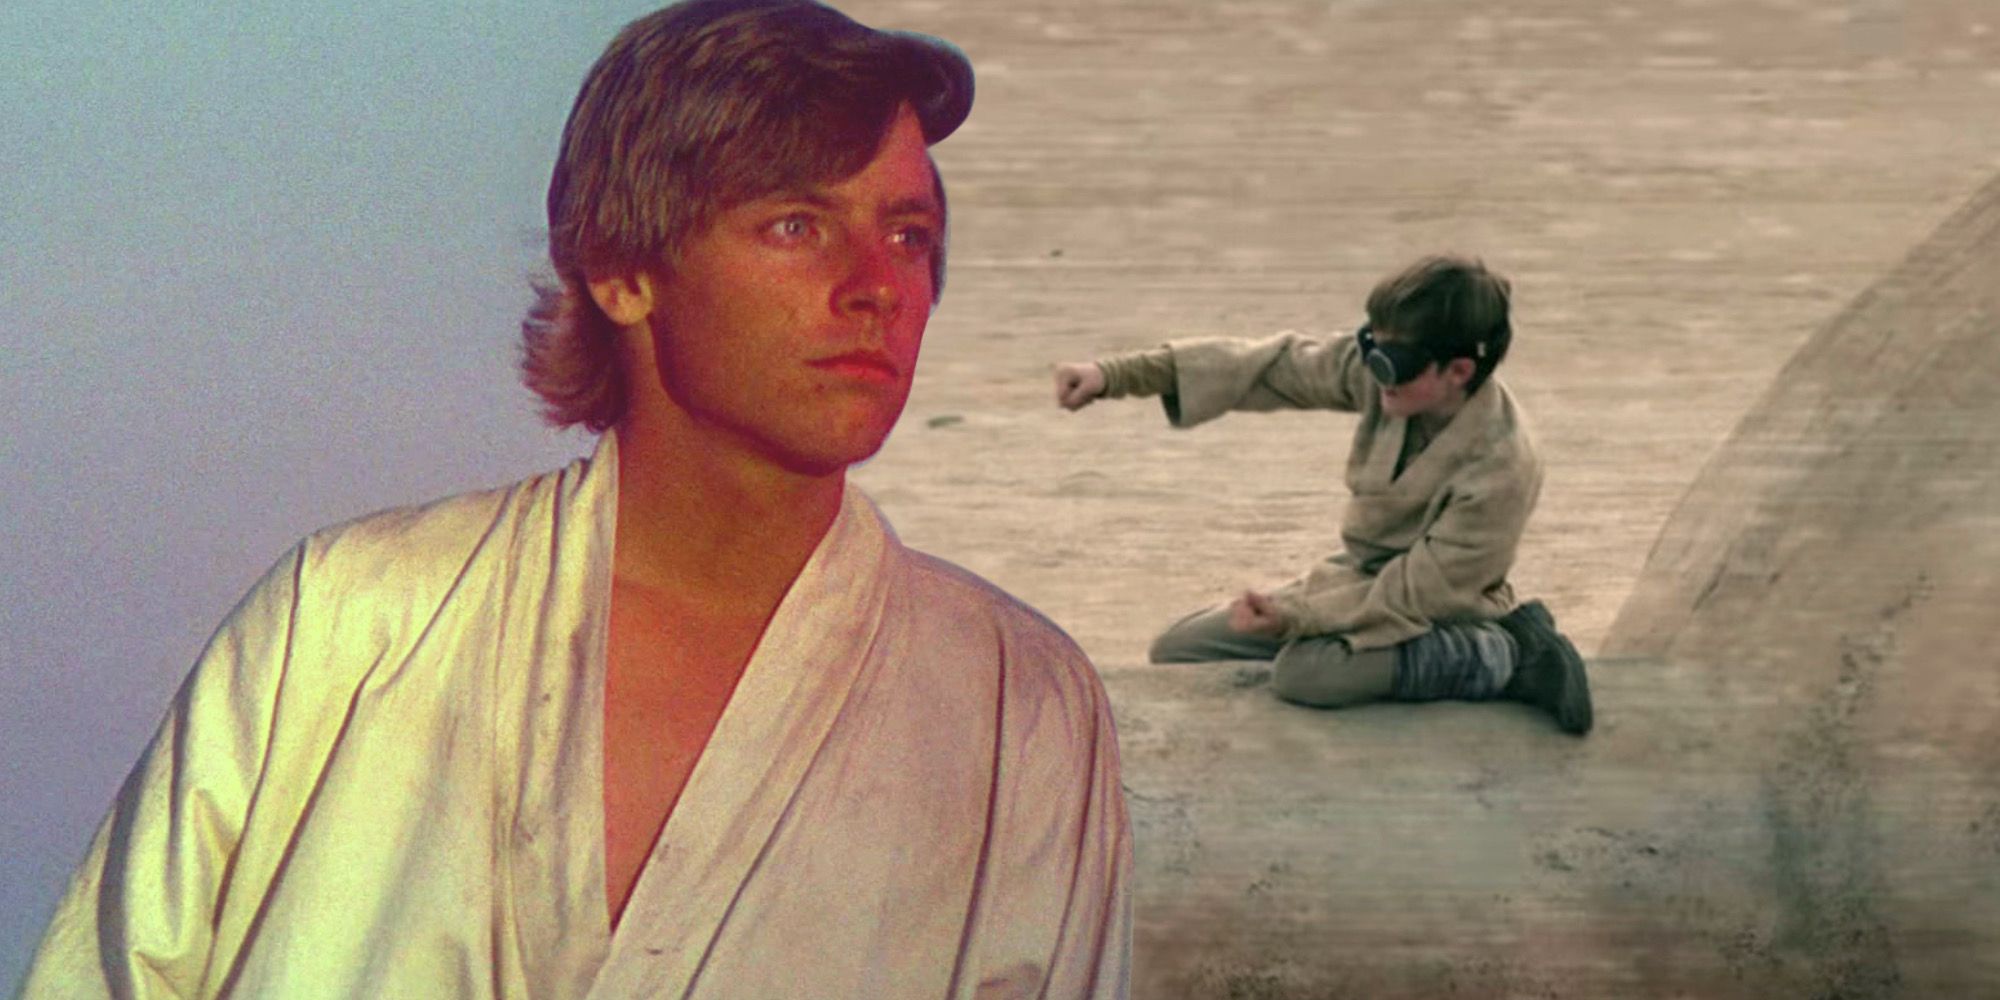 Luke skywalker actor